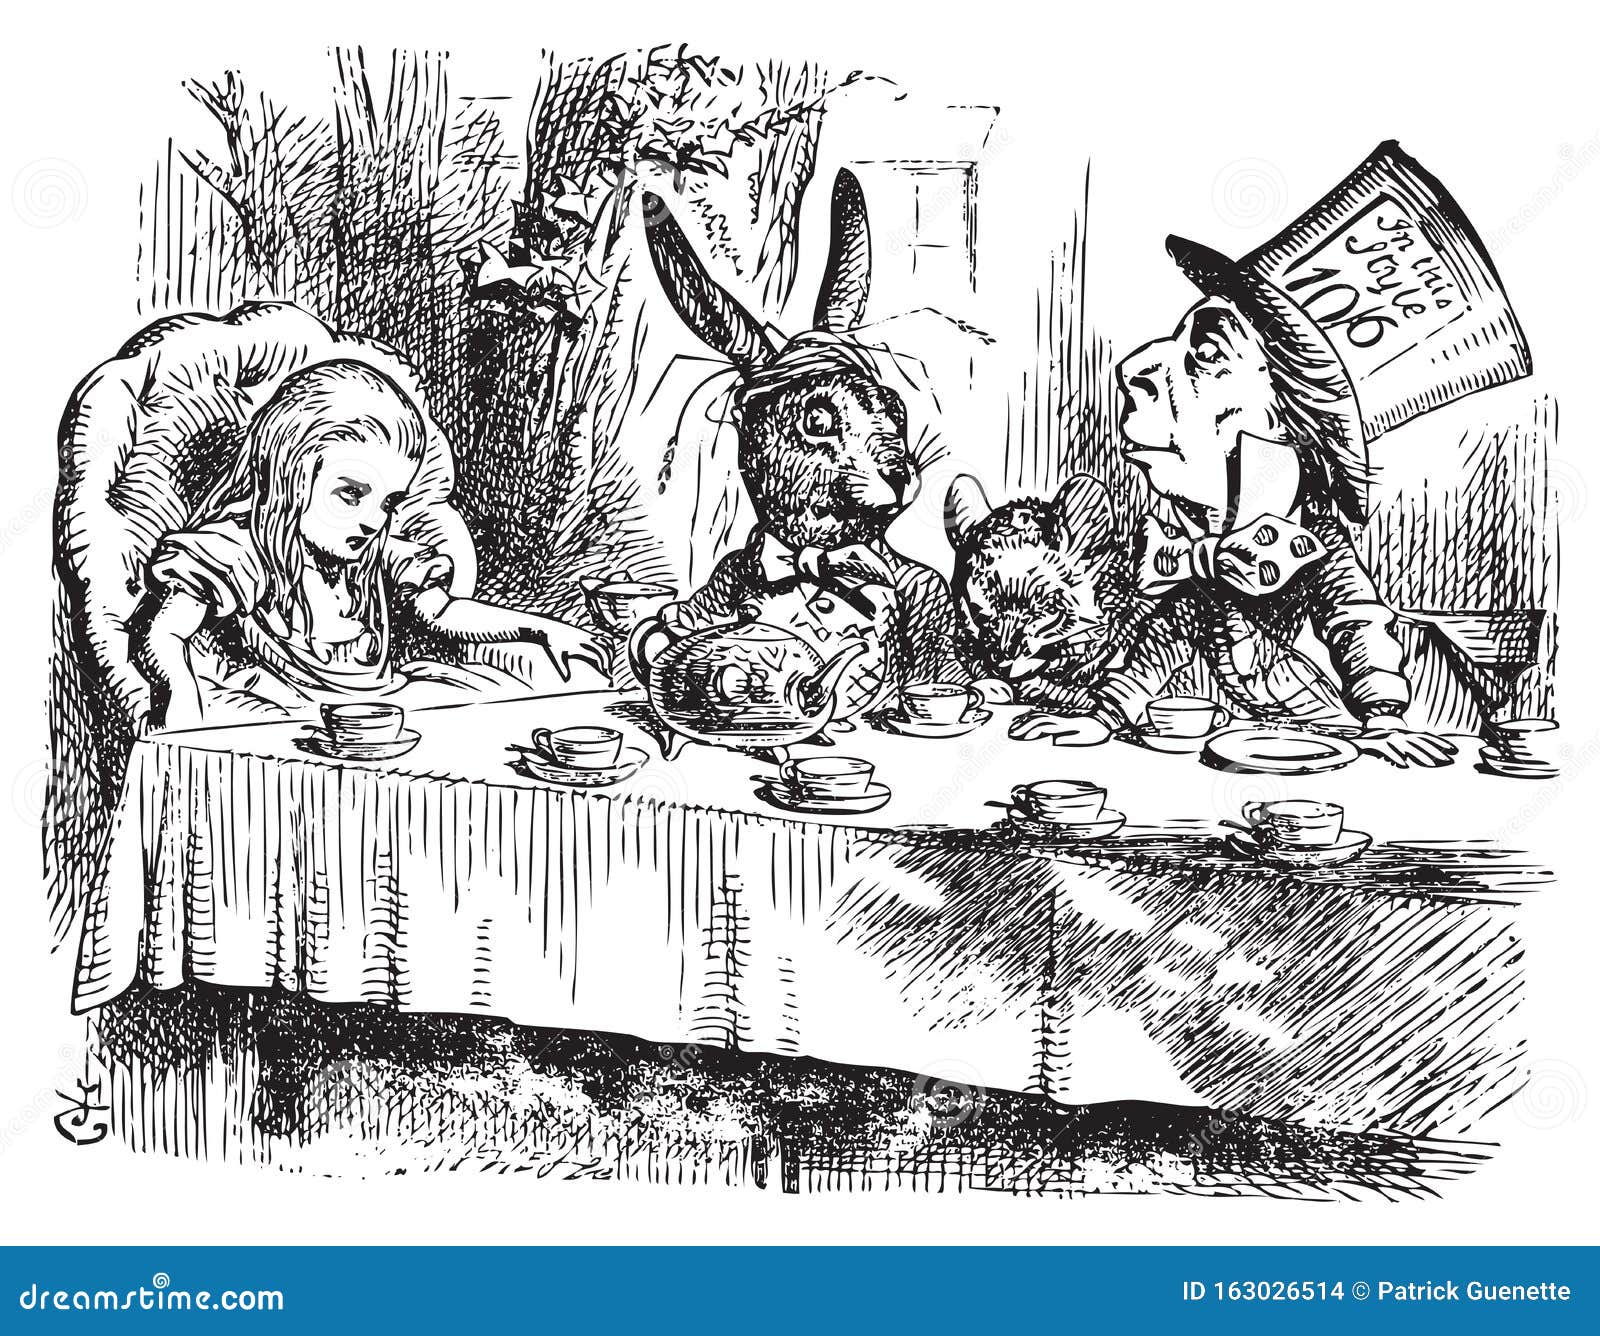 https://thumbs.dreamstime.com/z/mad-hatter-s-tea-party-alice-wonderland-original-vintage-engraving-hatter-dormouse-white-rabbit-s-adventures-163026514.jpg